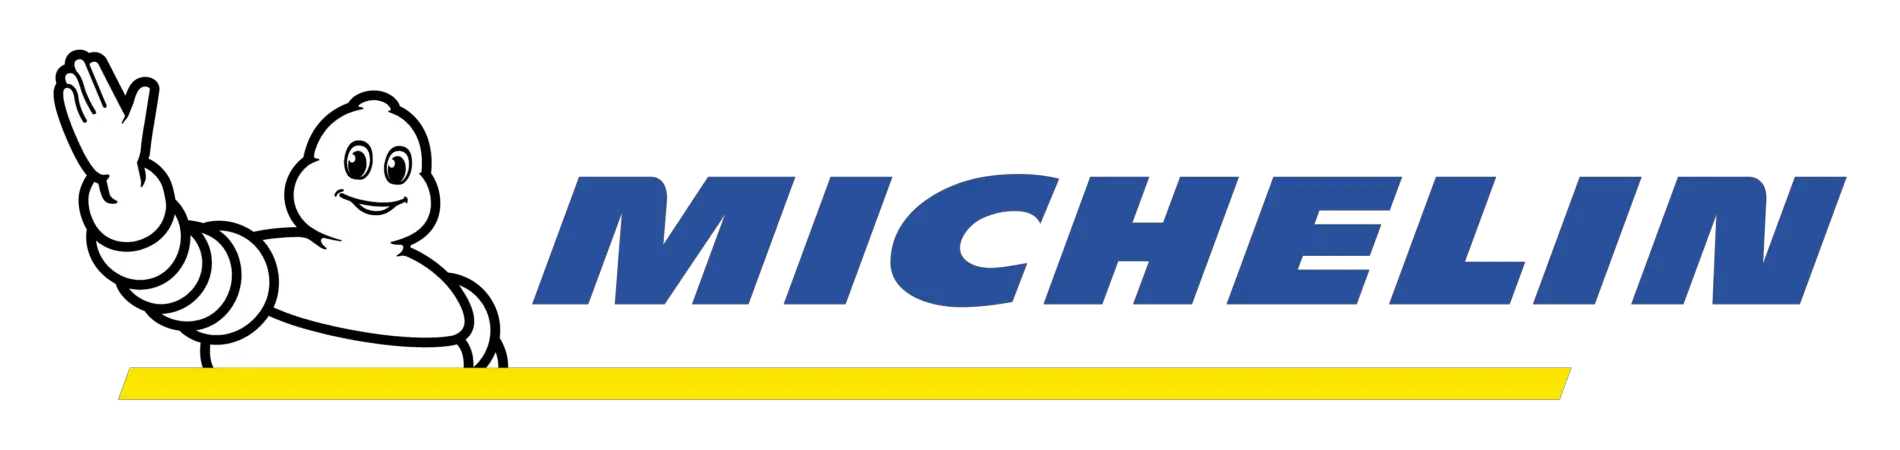 Details 48 el logo de michelin - Abzlocal.mx